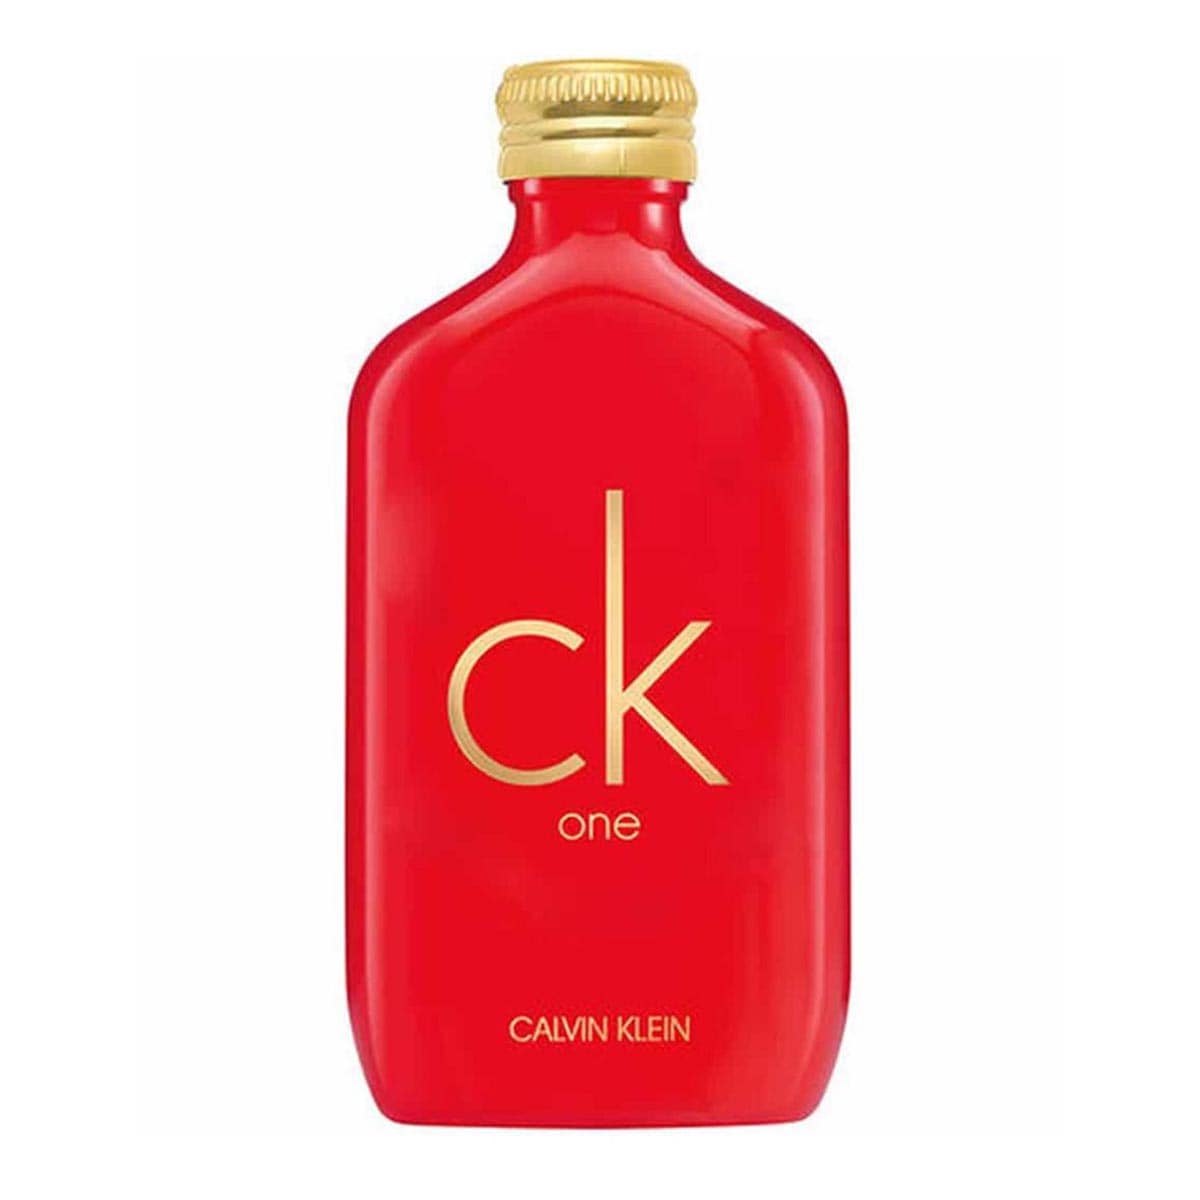 Calvin Klein One Collector's Edition Perfume Edt For Women 100 Ml-Perfume - Allurebeautypk